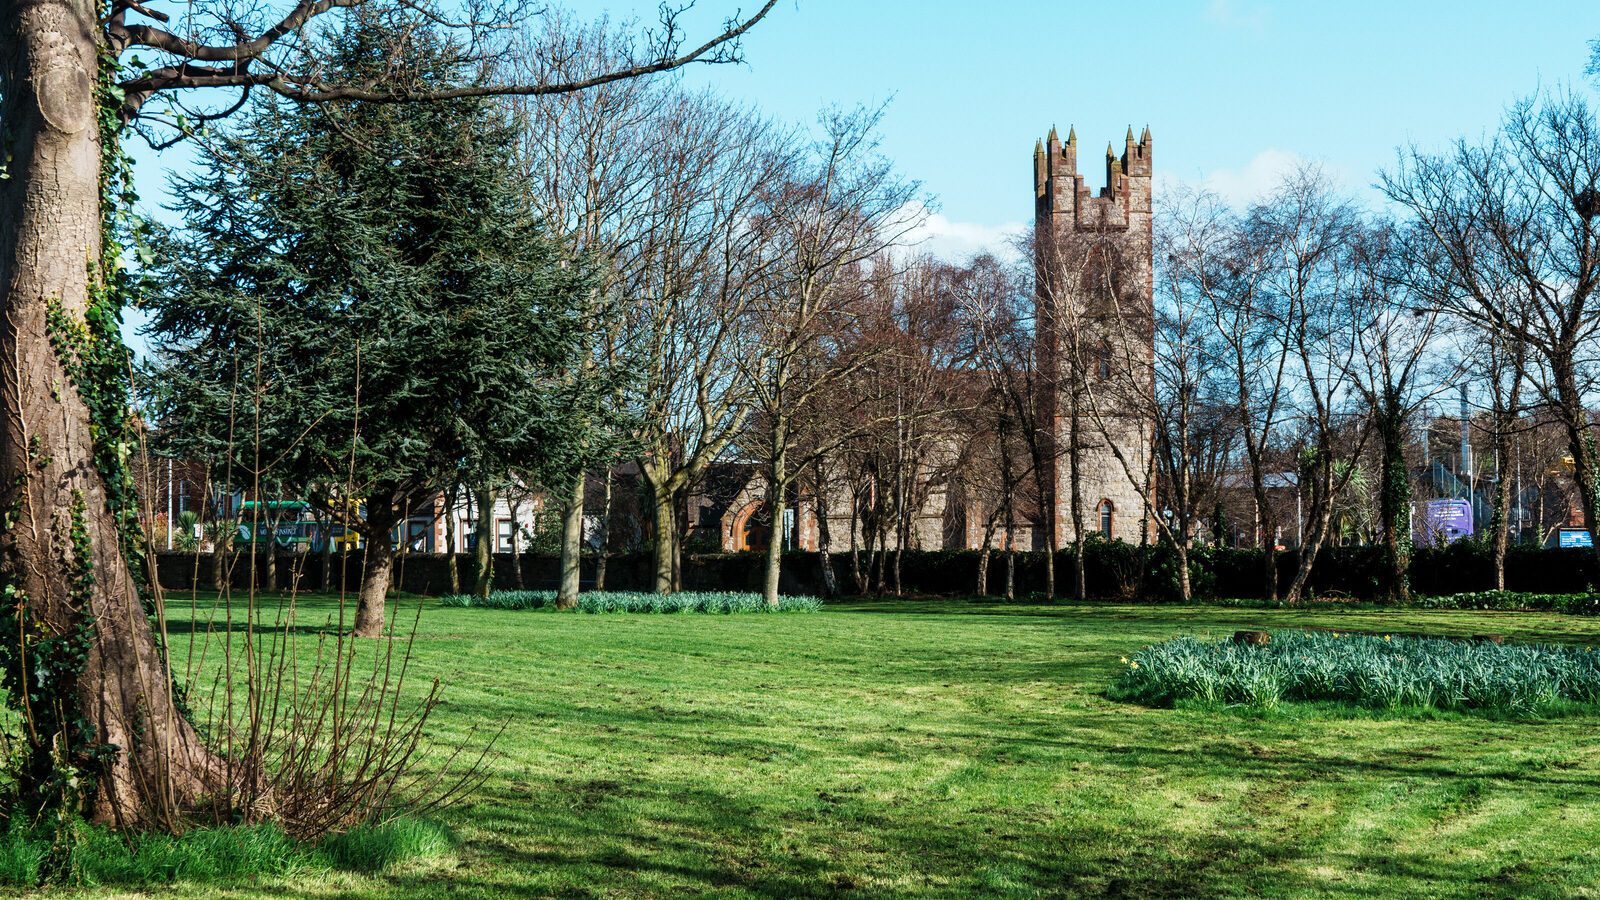 CLONTARF AND SCOTS PRESBYTERIAN CHURCH [A WELCOMING COMMUNITY IN DUBLIN]-223330-1